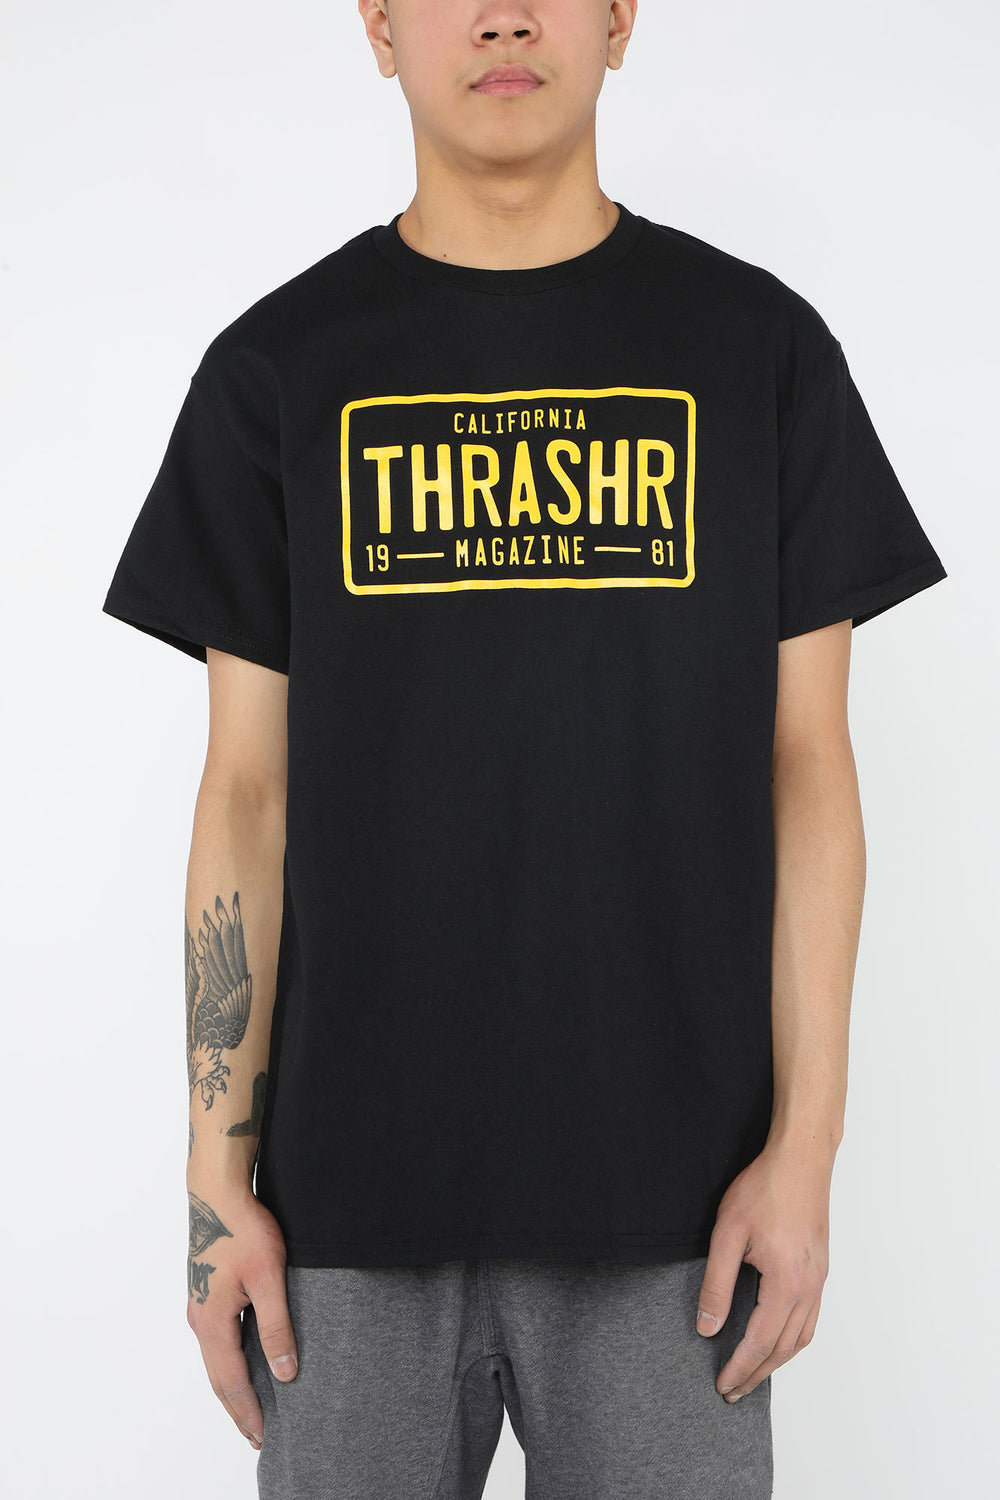 Thrasher License Plate T-Shirt Black